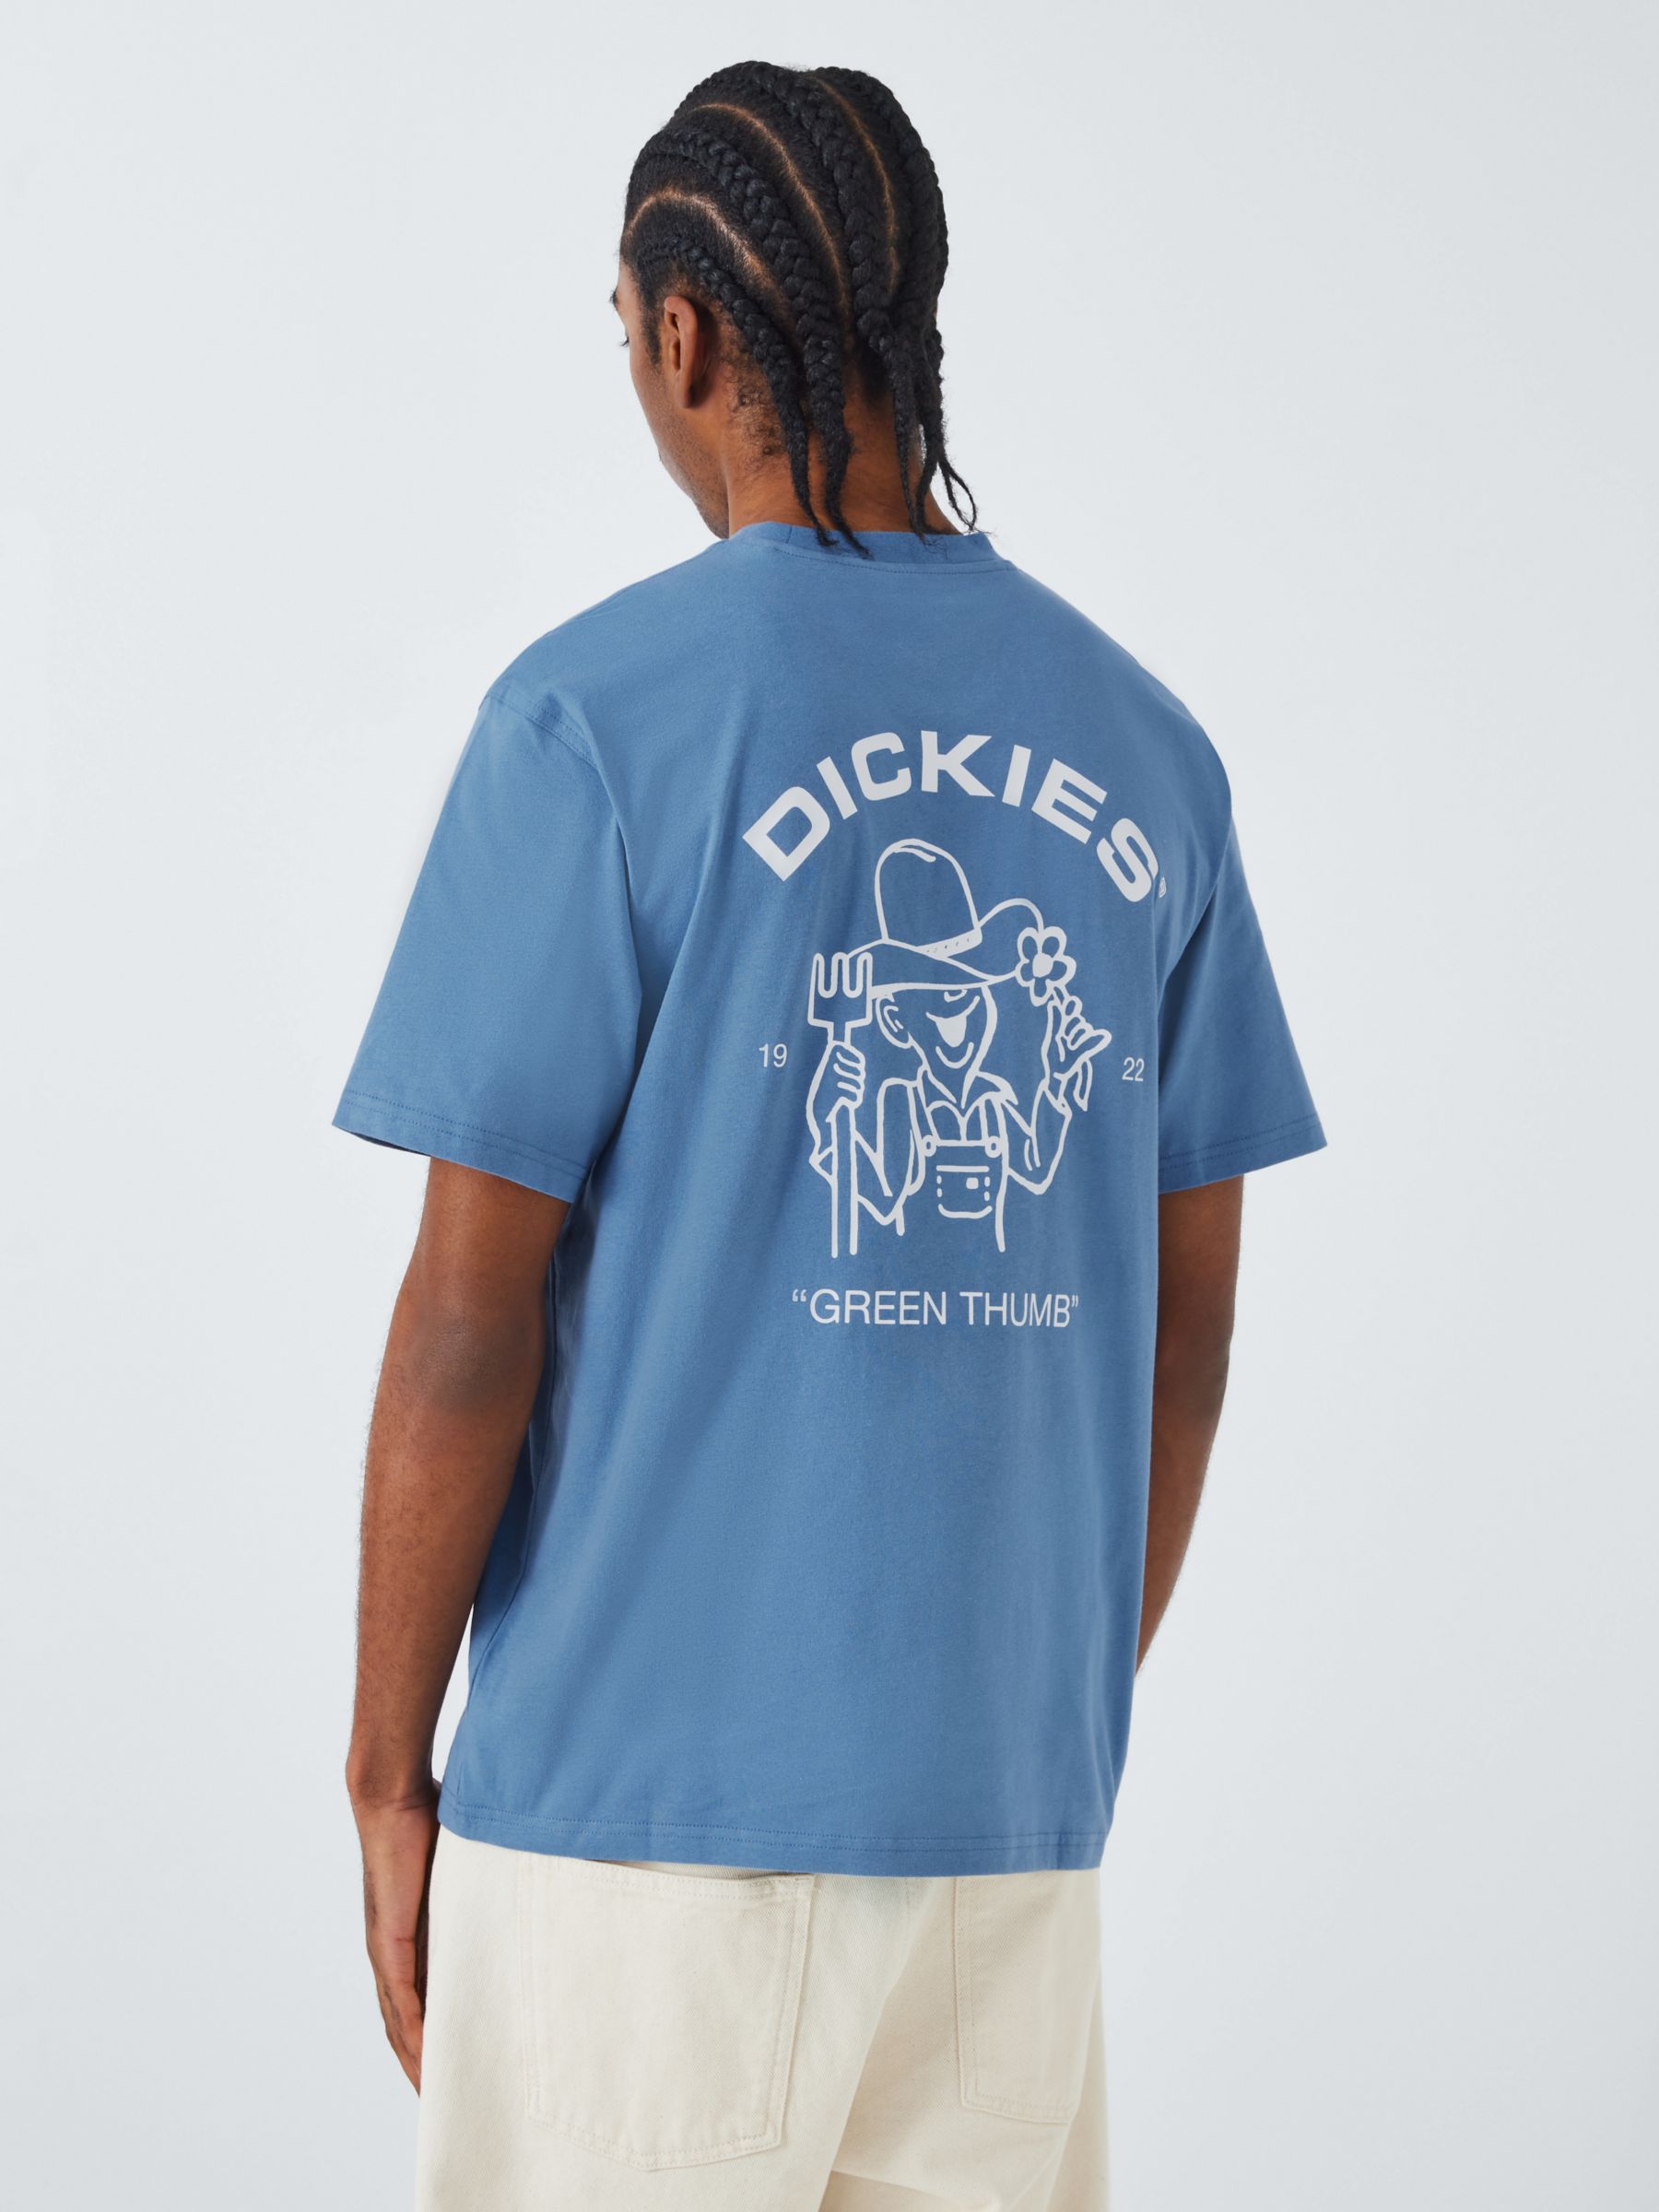 Dickies Wakefield Short Sleeve T-Shirt, Coronet Blue, S